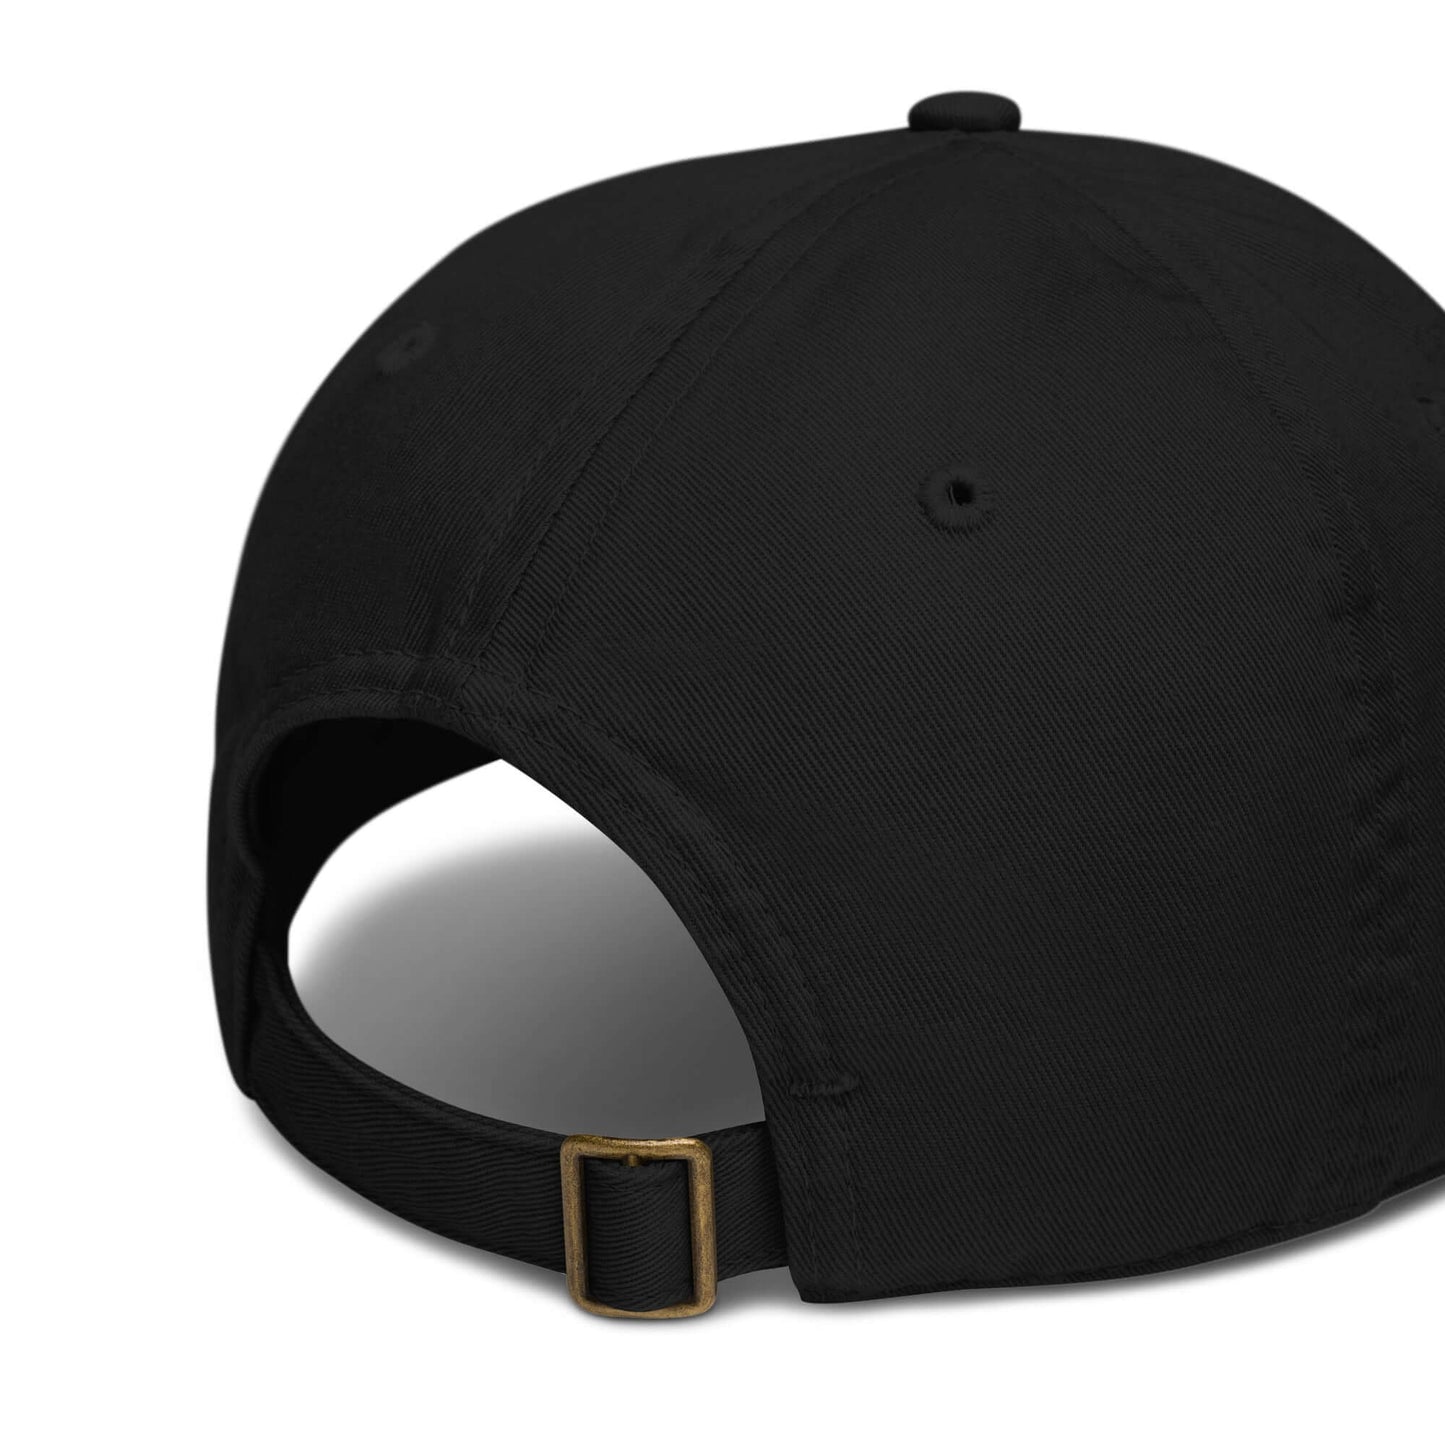 Organic Yoga Baseball Hat in Black Practice Pieces